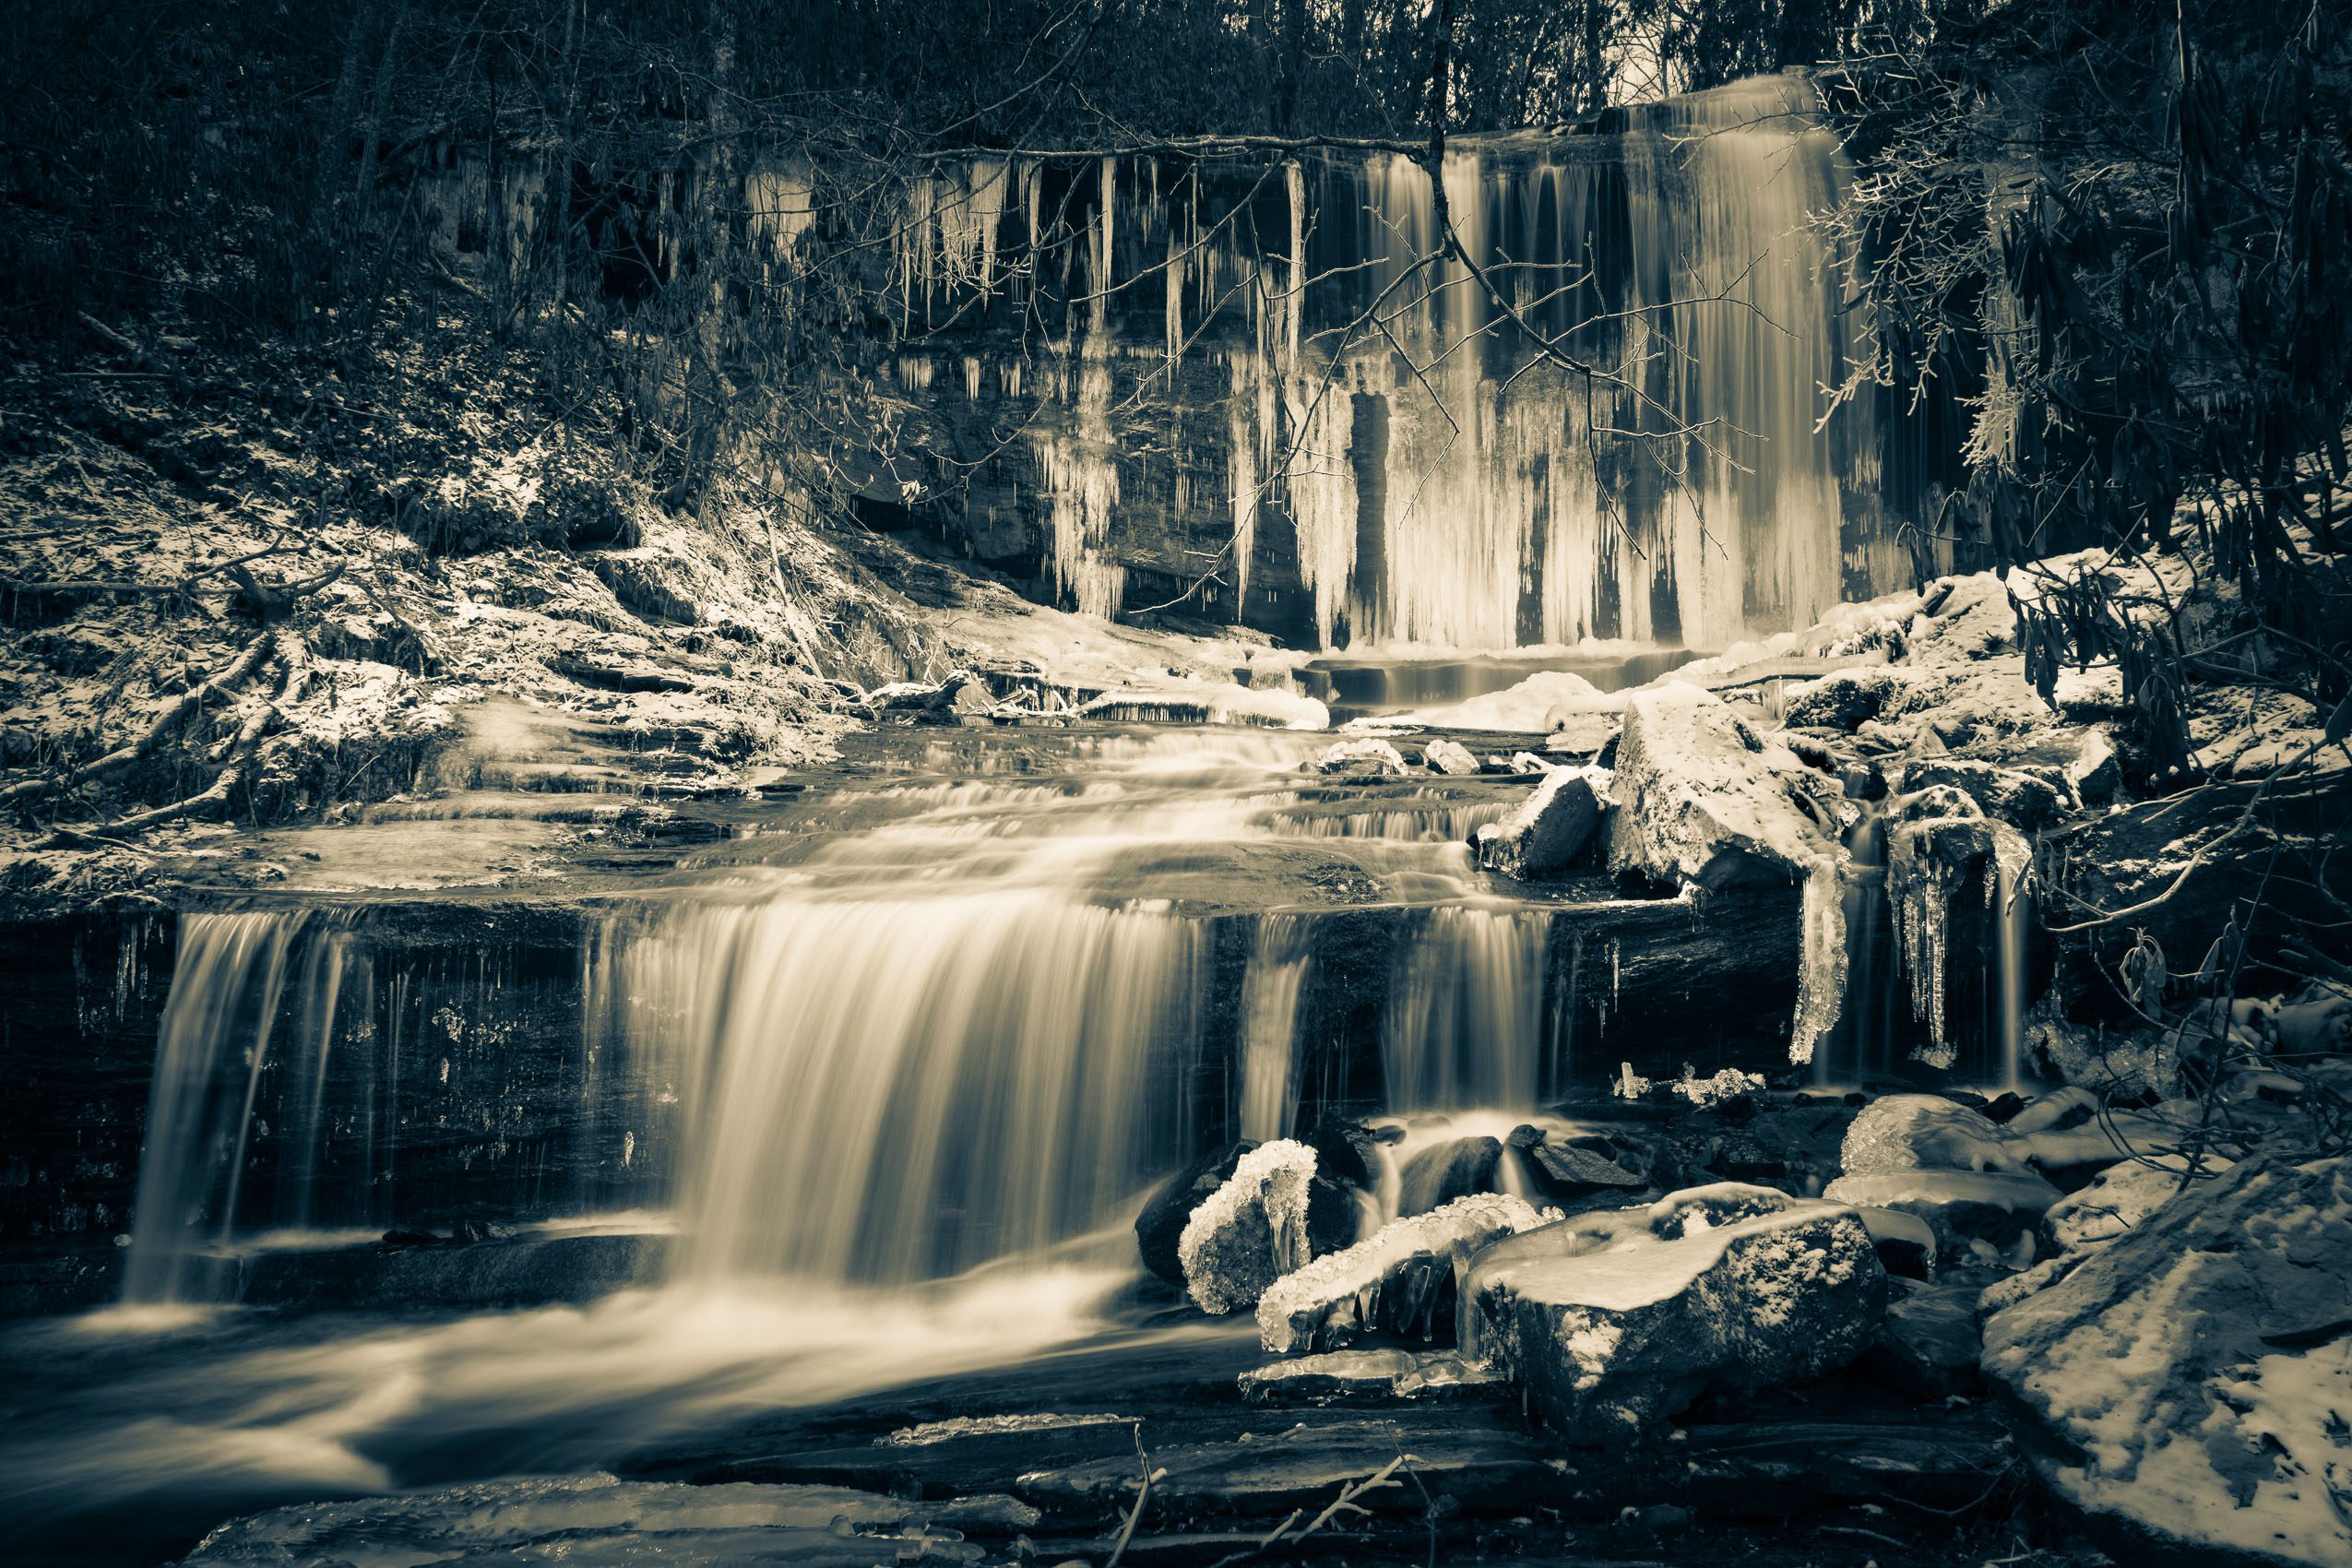 Frozen Grassy Creek Falls, Little Switzerland, North Carolina, USA.